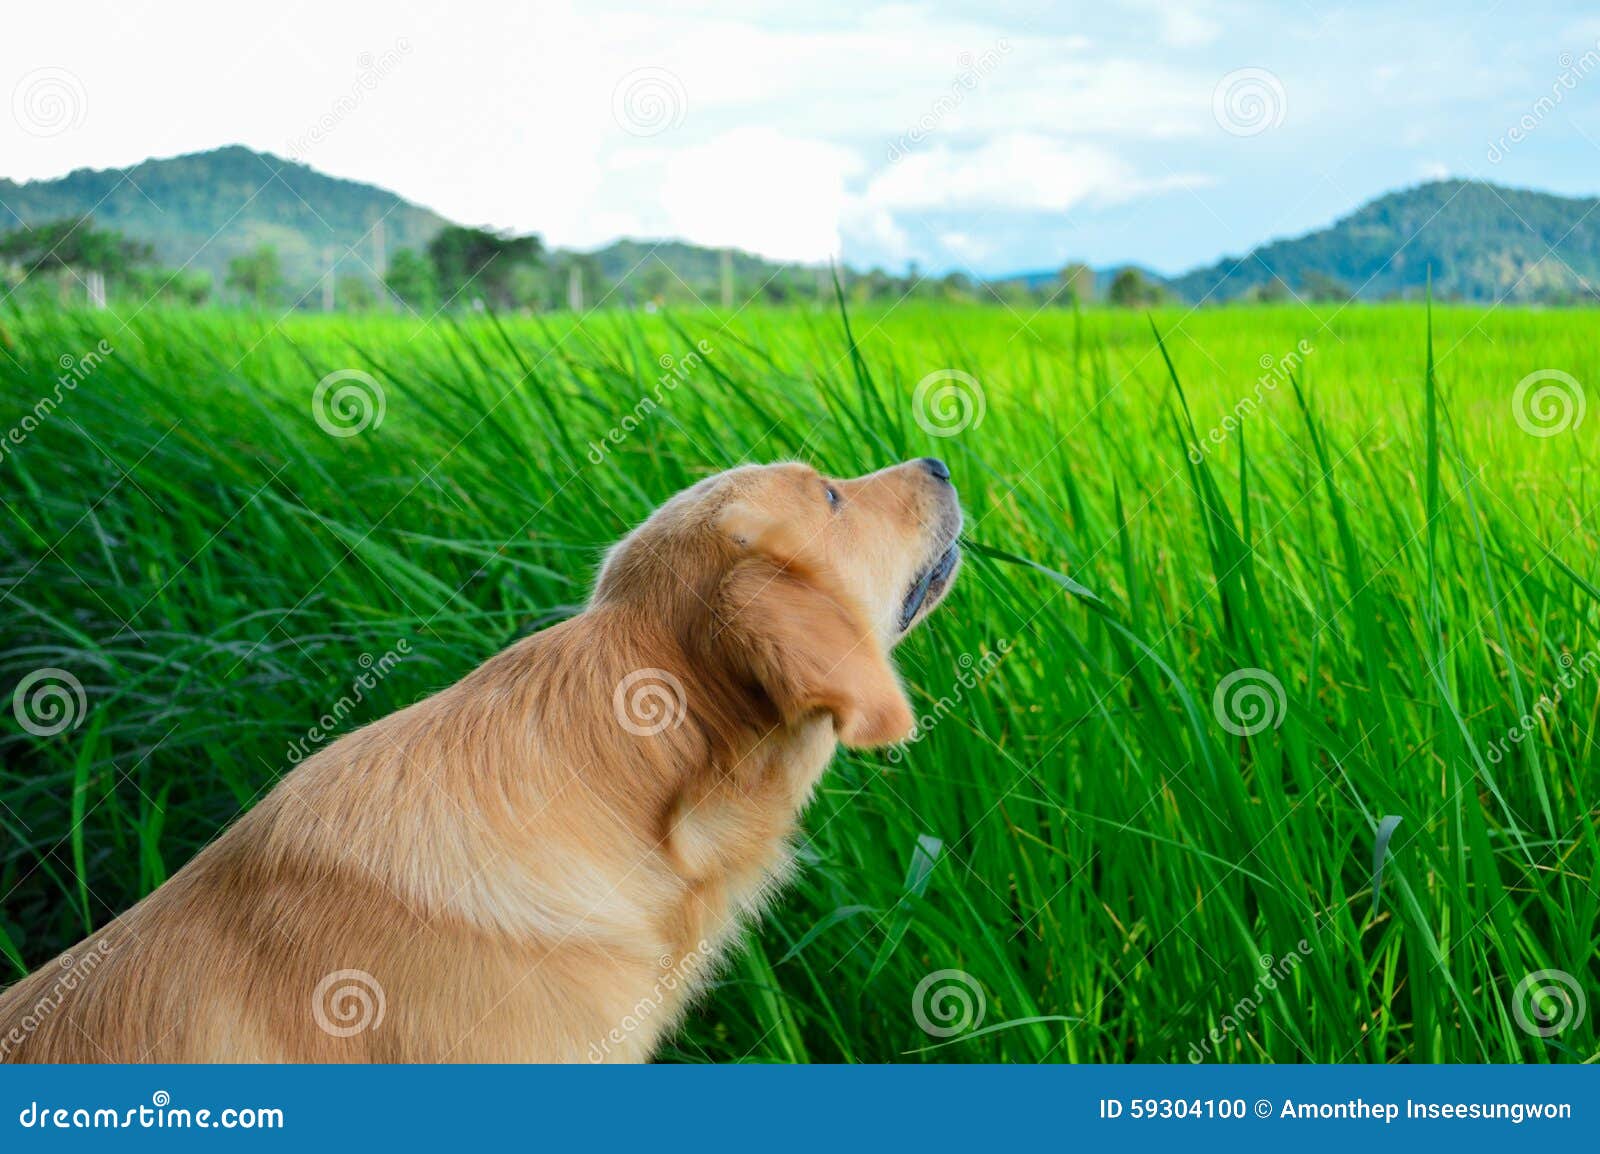 Почему собака травка. Собака на газоне. Собака травка. Собака на траве. Собака на лужайке.